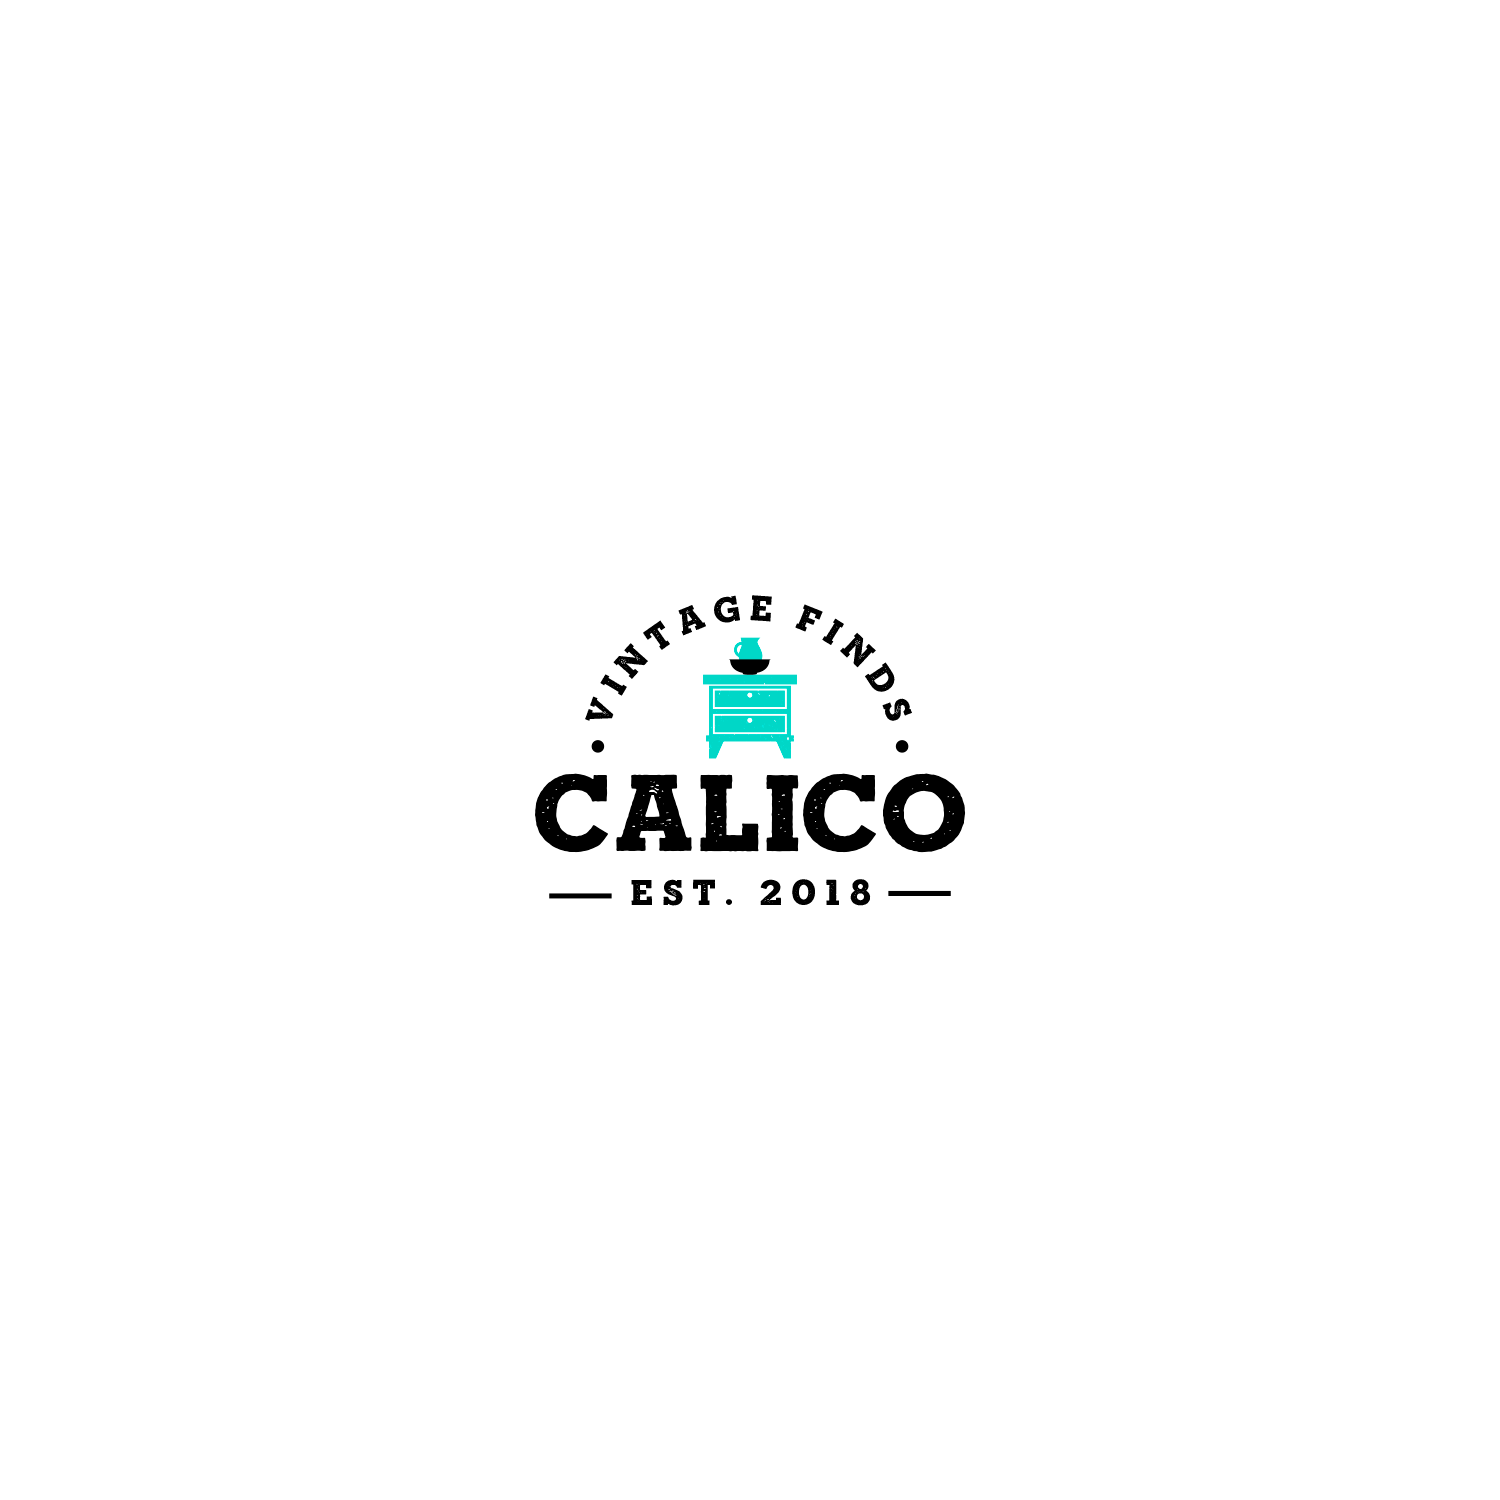 Google Calico Logo - Logo Design for Calico Vintage Finds by Felipe Moura. Design